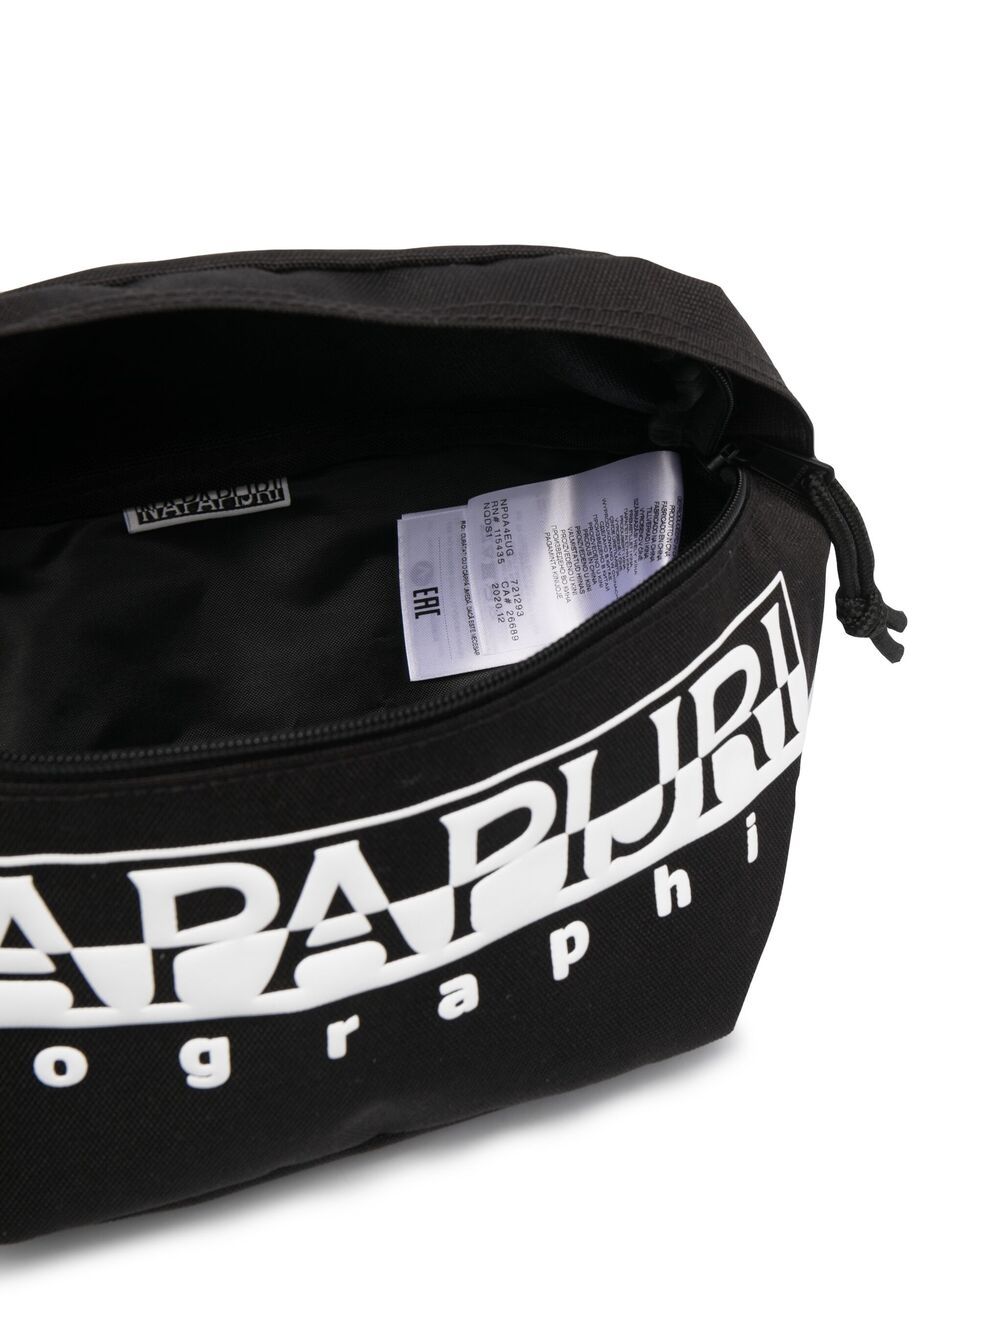 фото Napapijri поясная сумка с логотипом